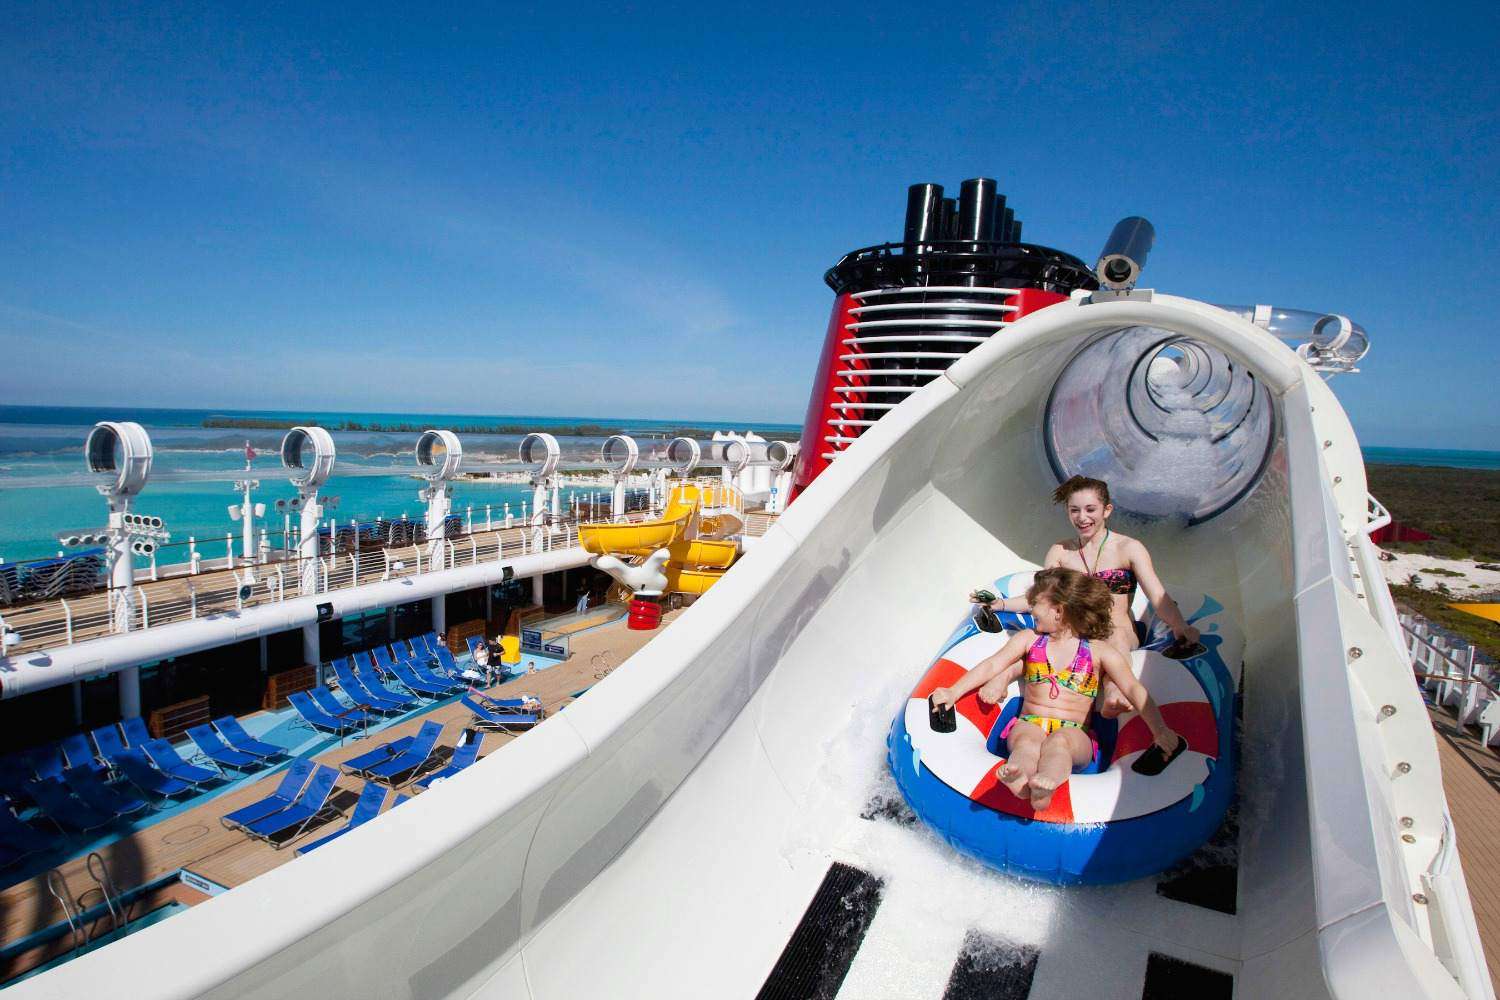 AquaDuck Water Coaster on the Disney Dream Cruise Ship